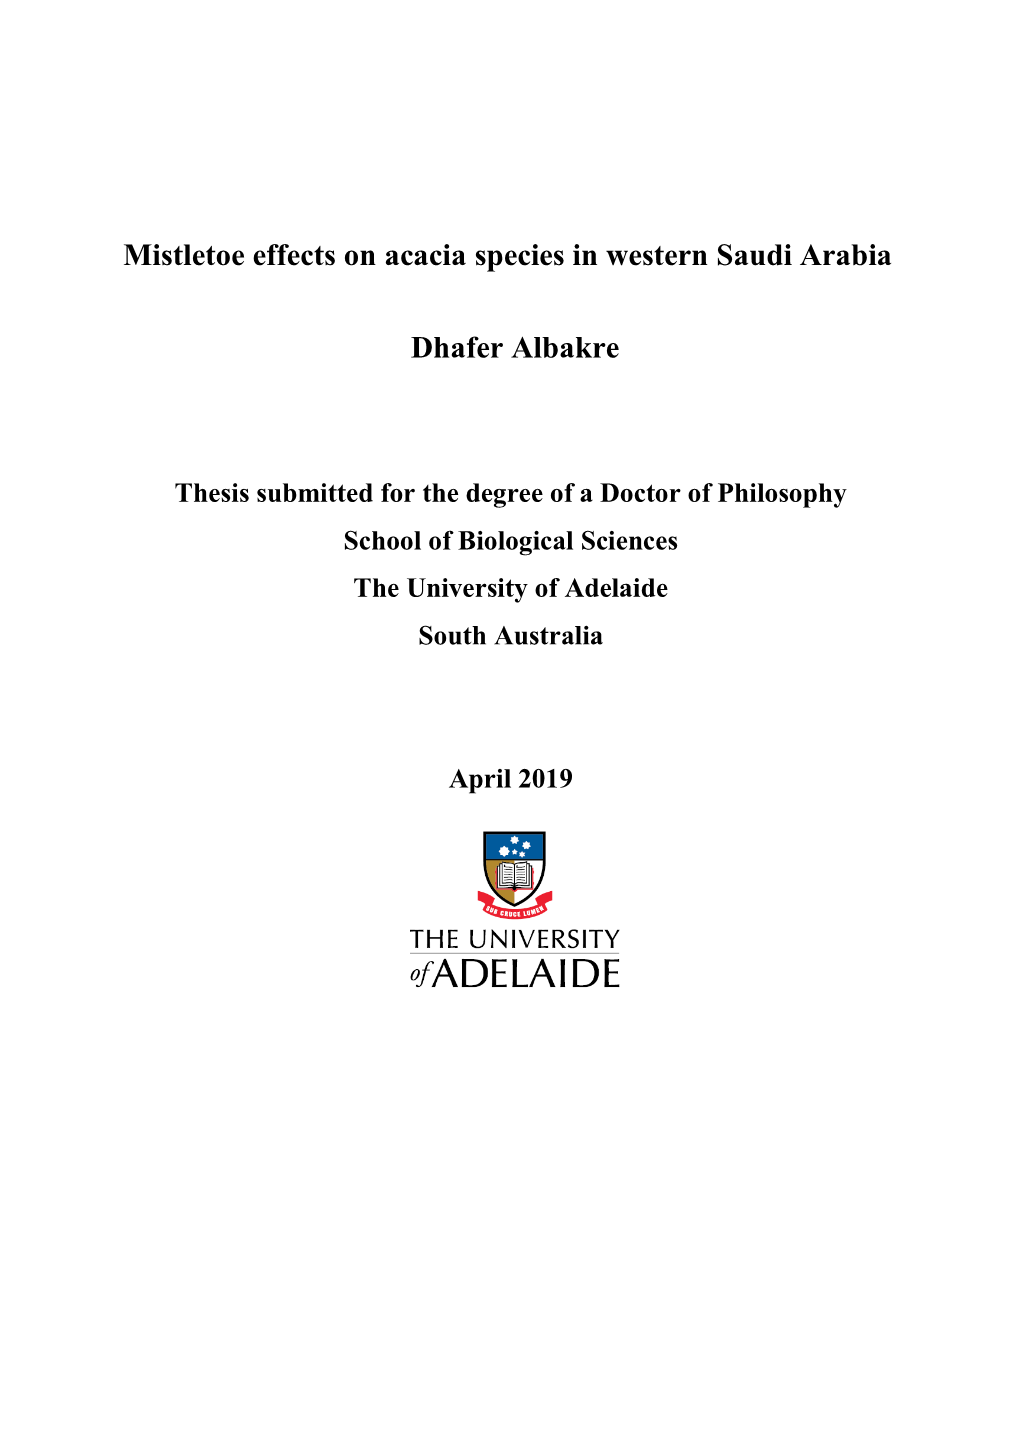 Mistletoe Effects on Acacia Species in Western Saudi Arabia Dhafer Albakre